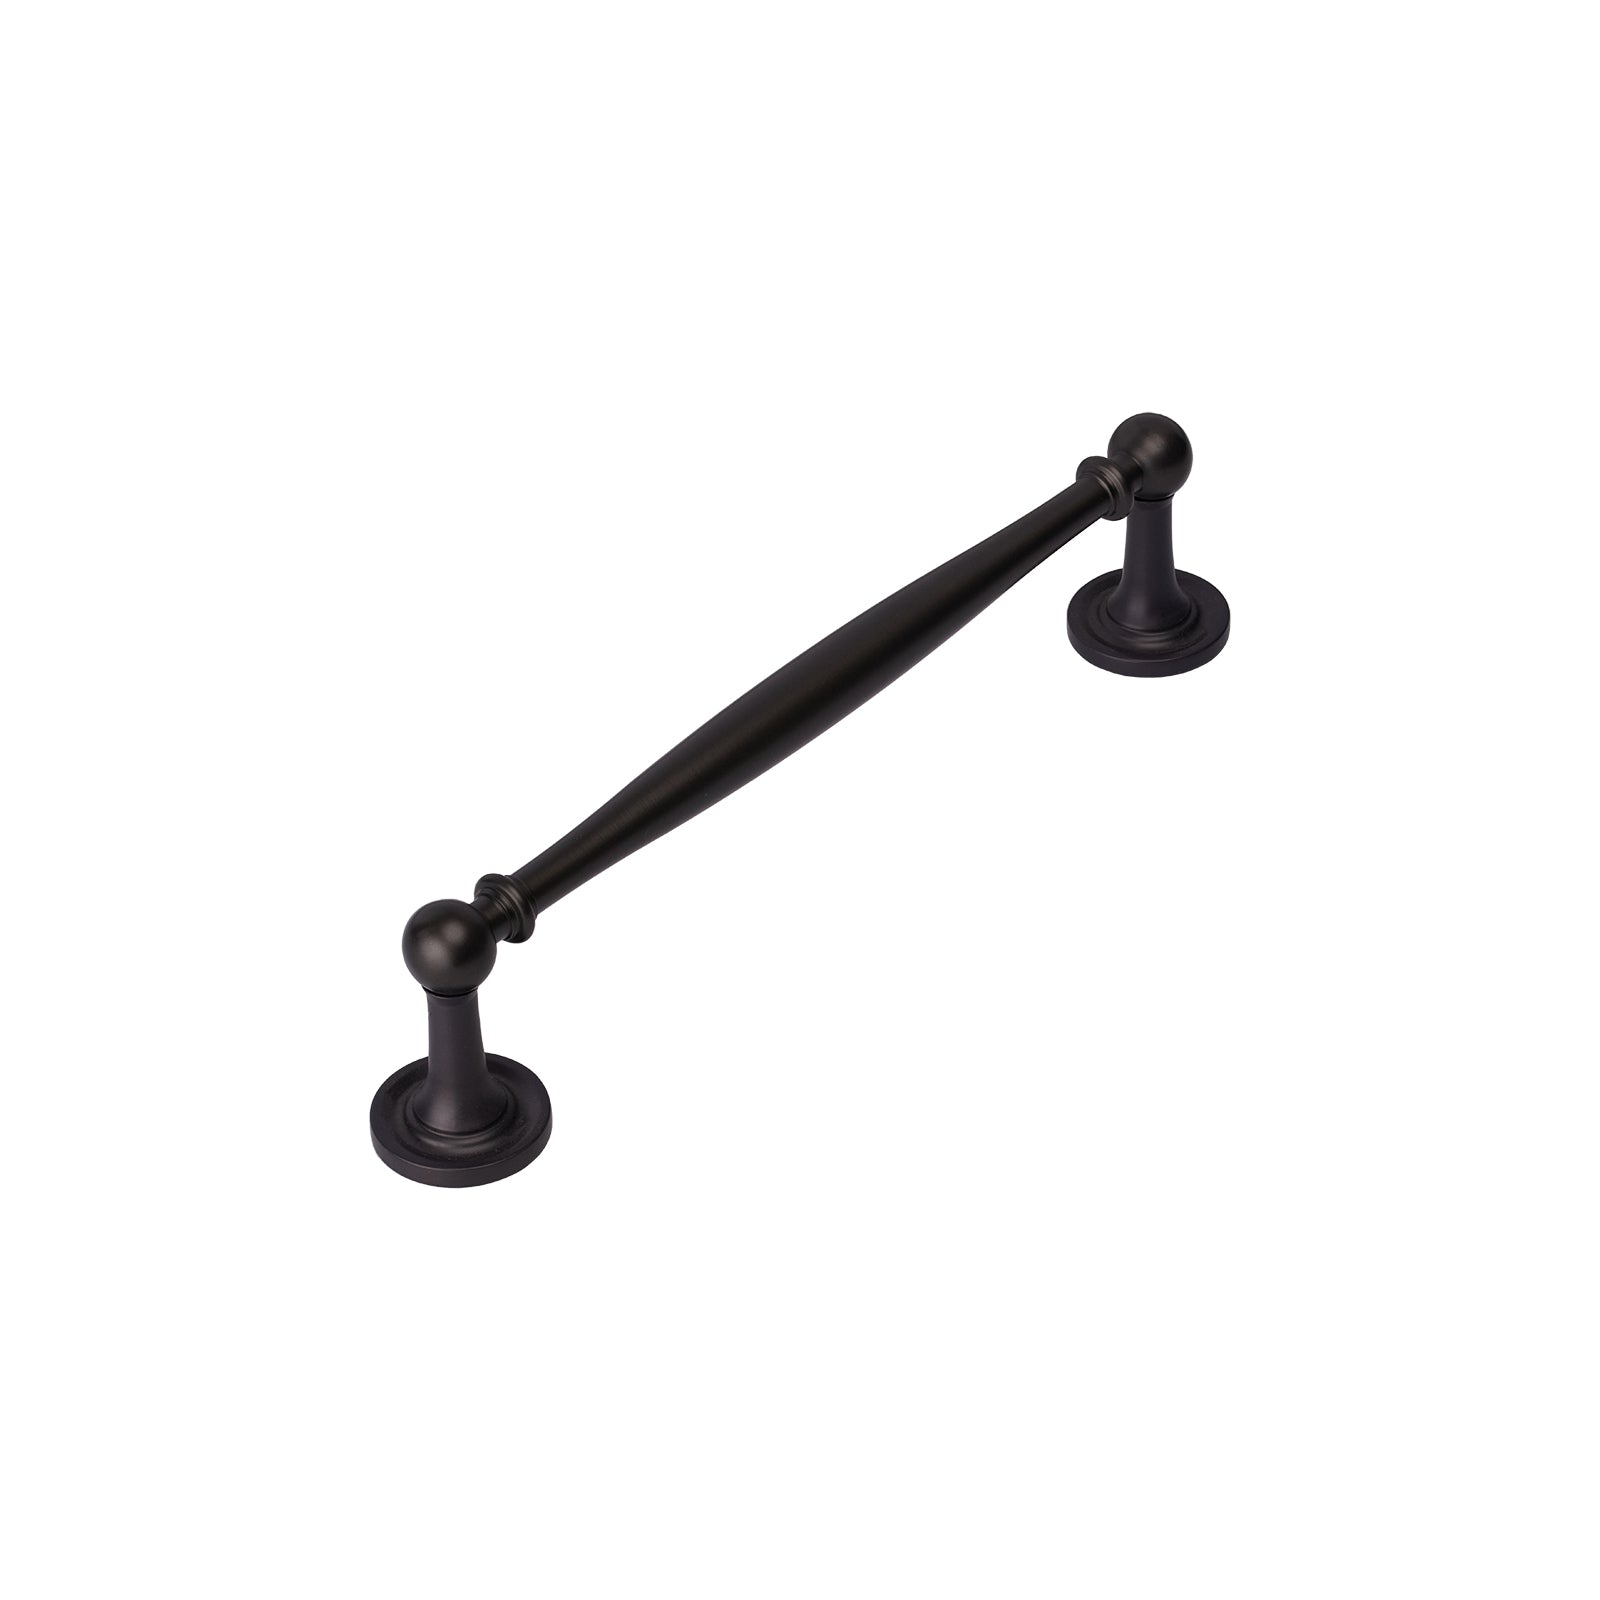 matt bronze Colonial pull handle, traditional pull handle